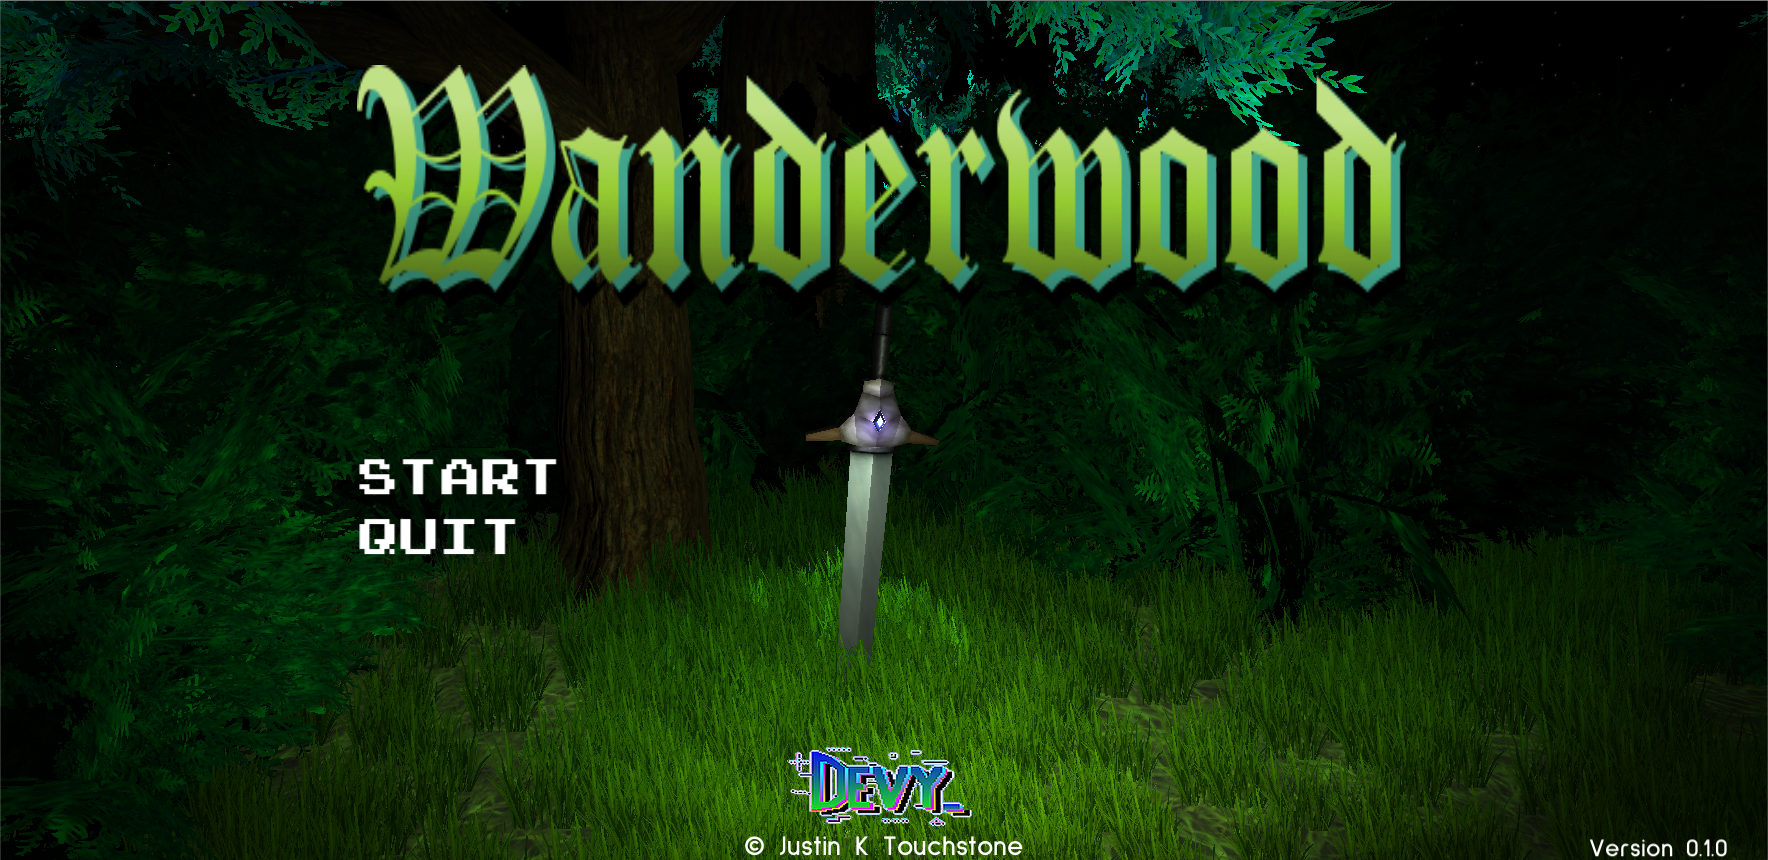 Wanderwood